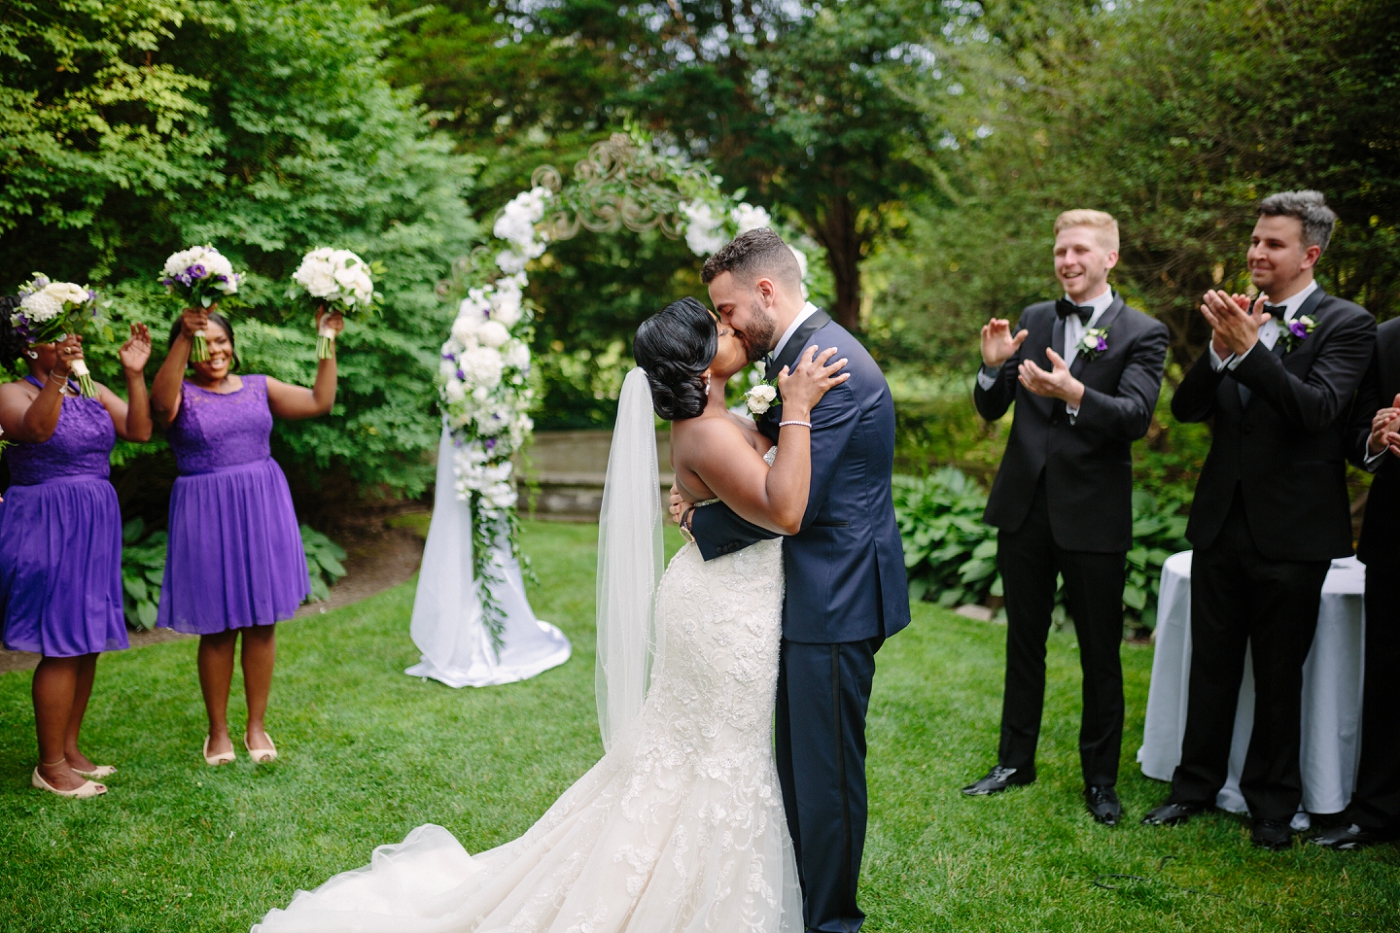 interracial wedding ceremony first kiss